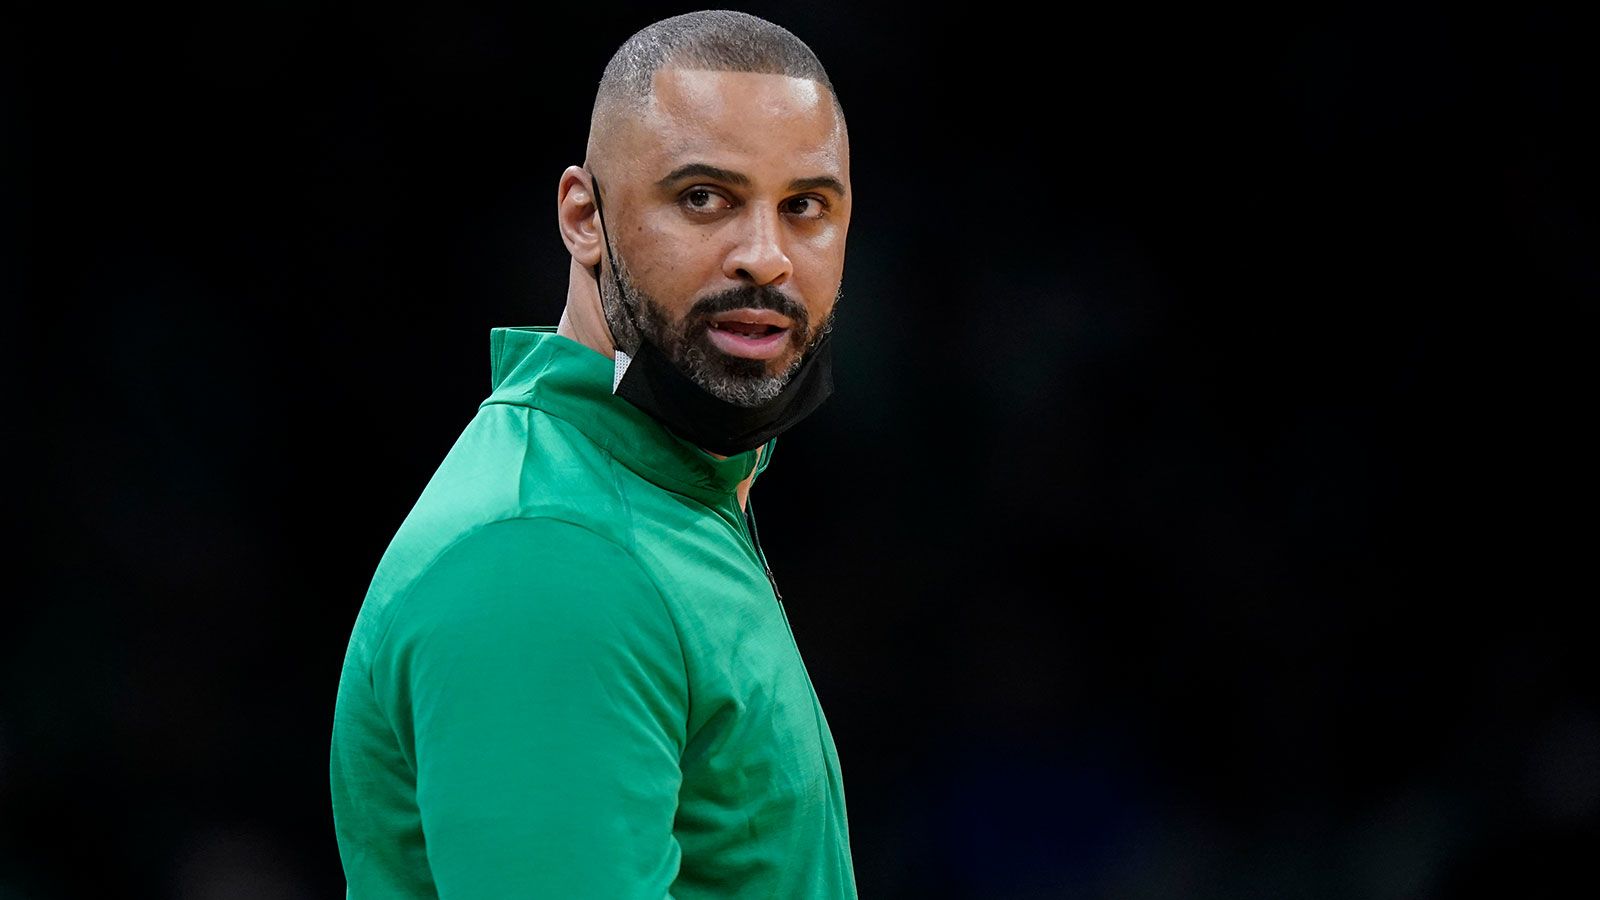 Ime Udoka, Boston Celtics head coach, suspended for entire NBA season | CNN